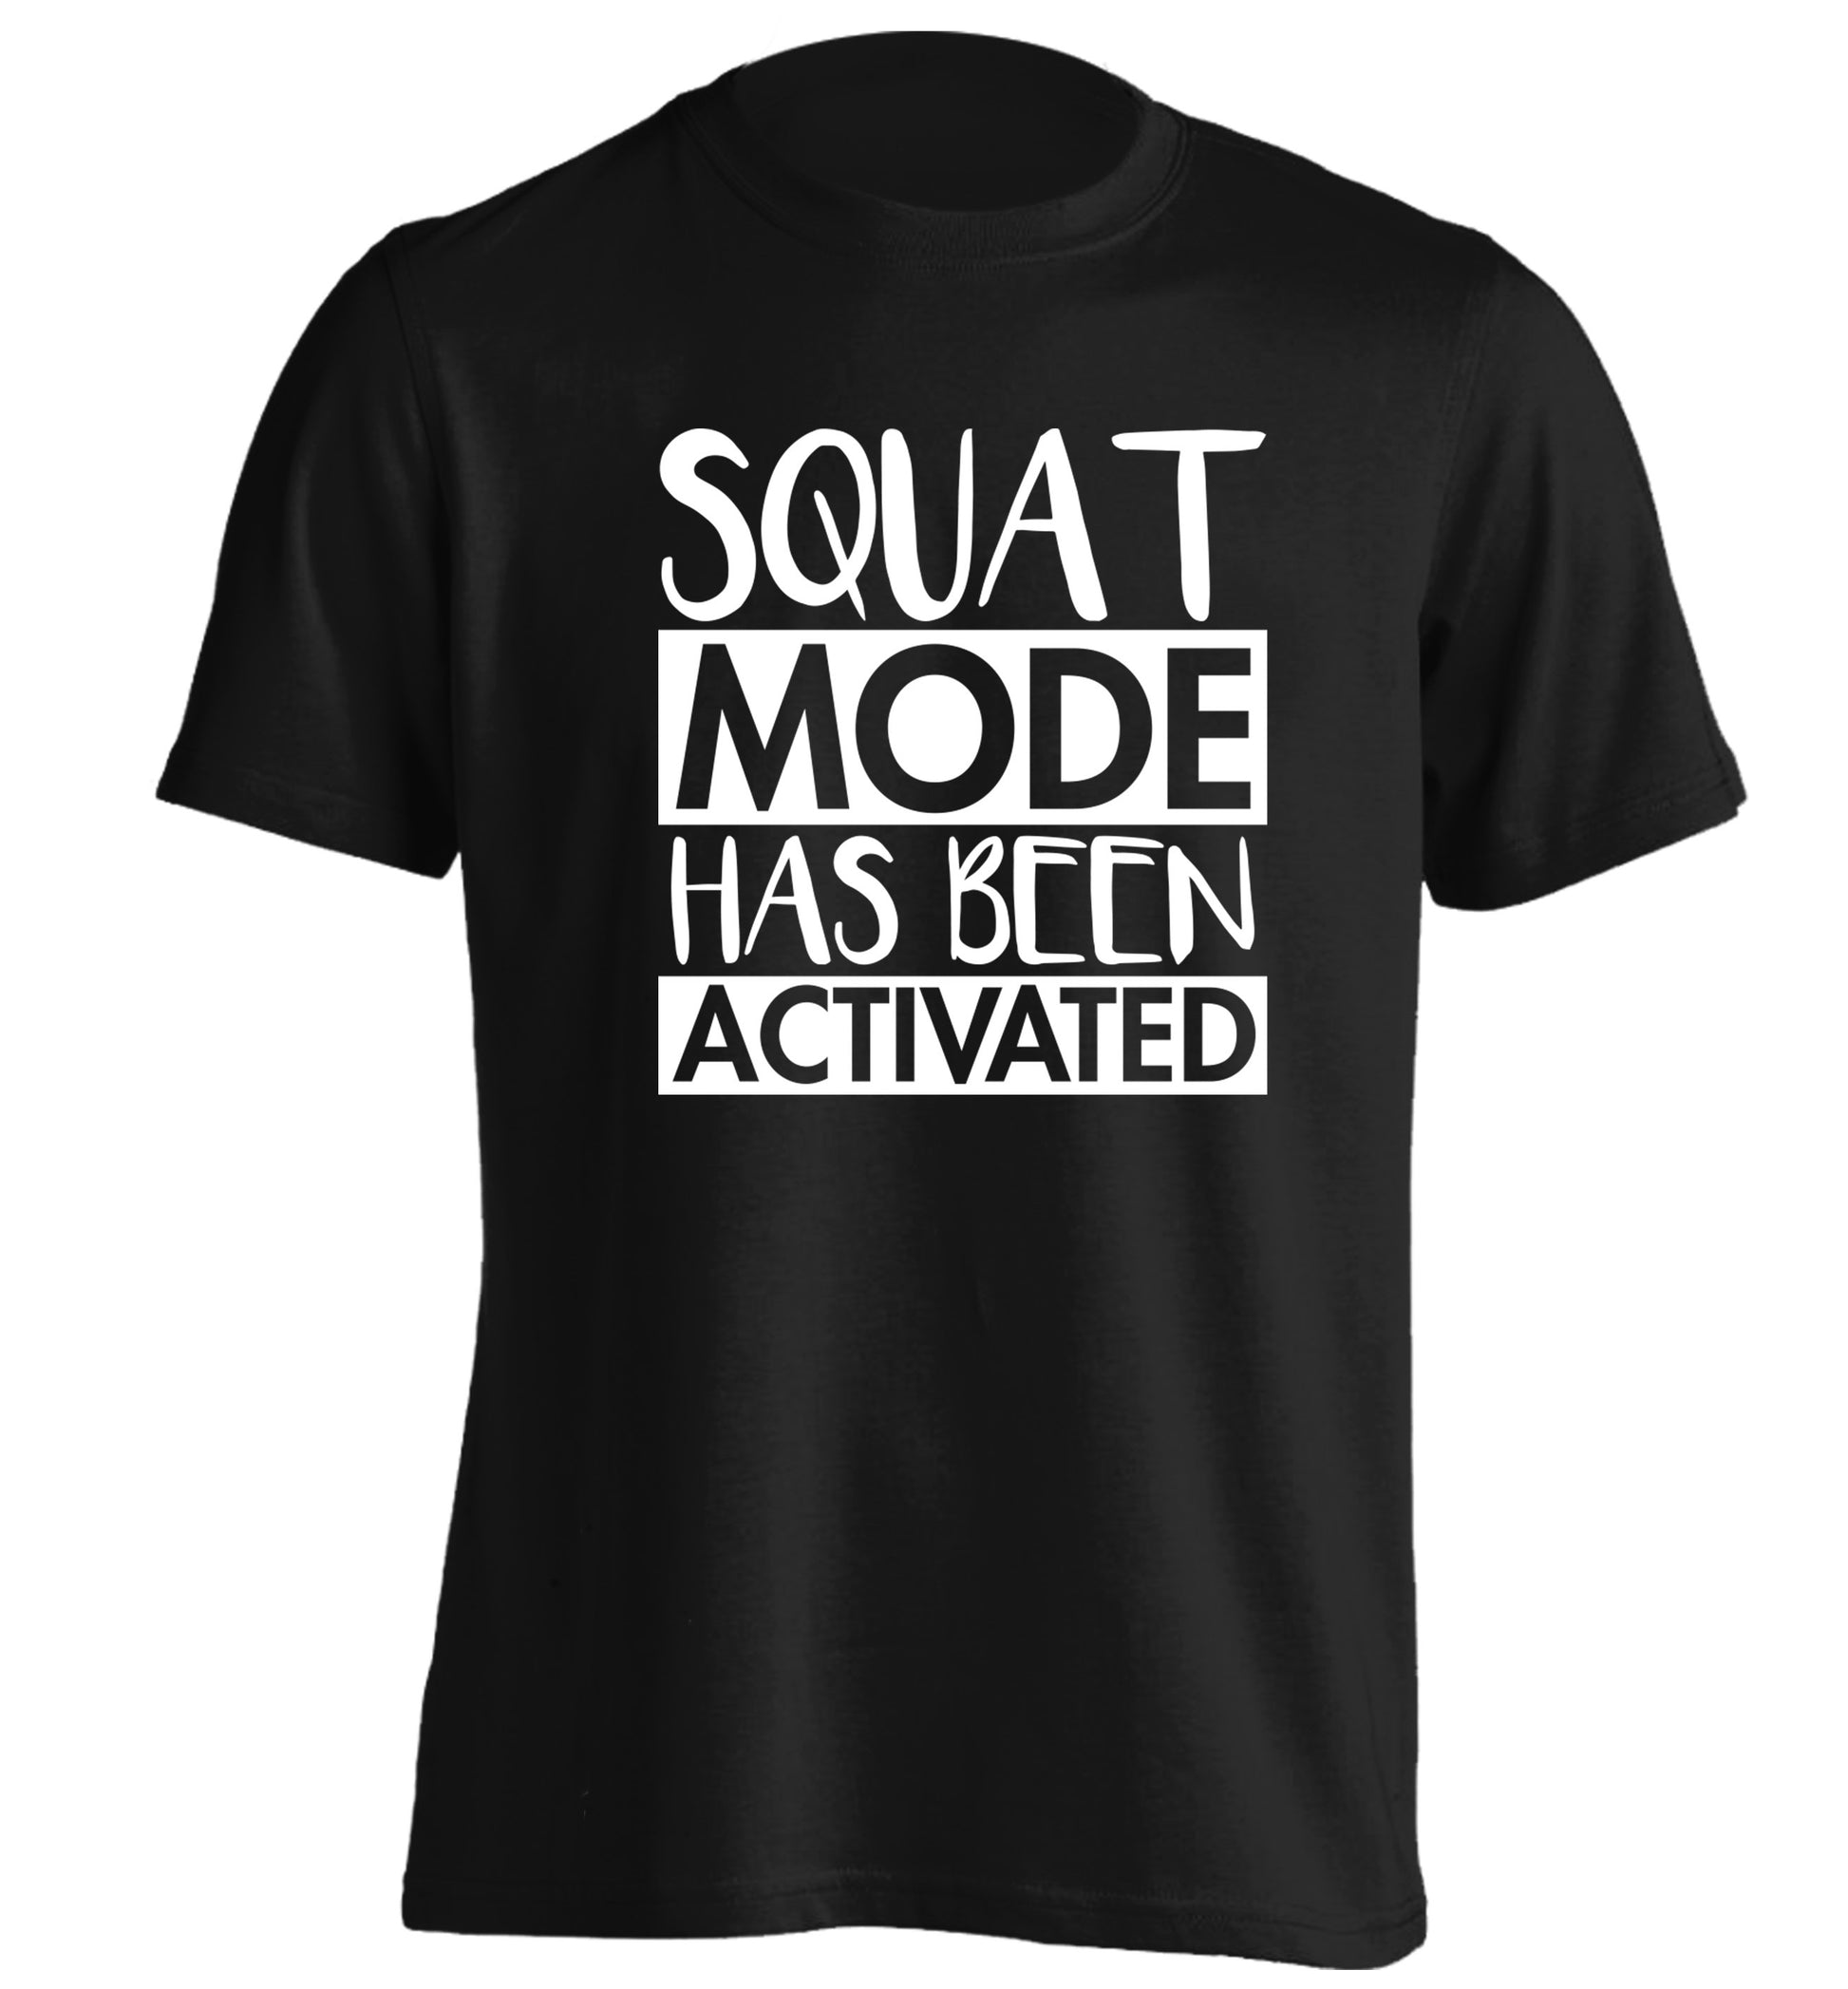 Squat mode activated adults unisex black Tshirt 2XL